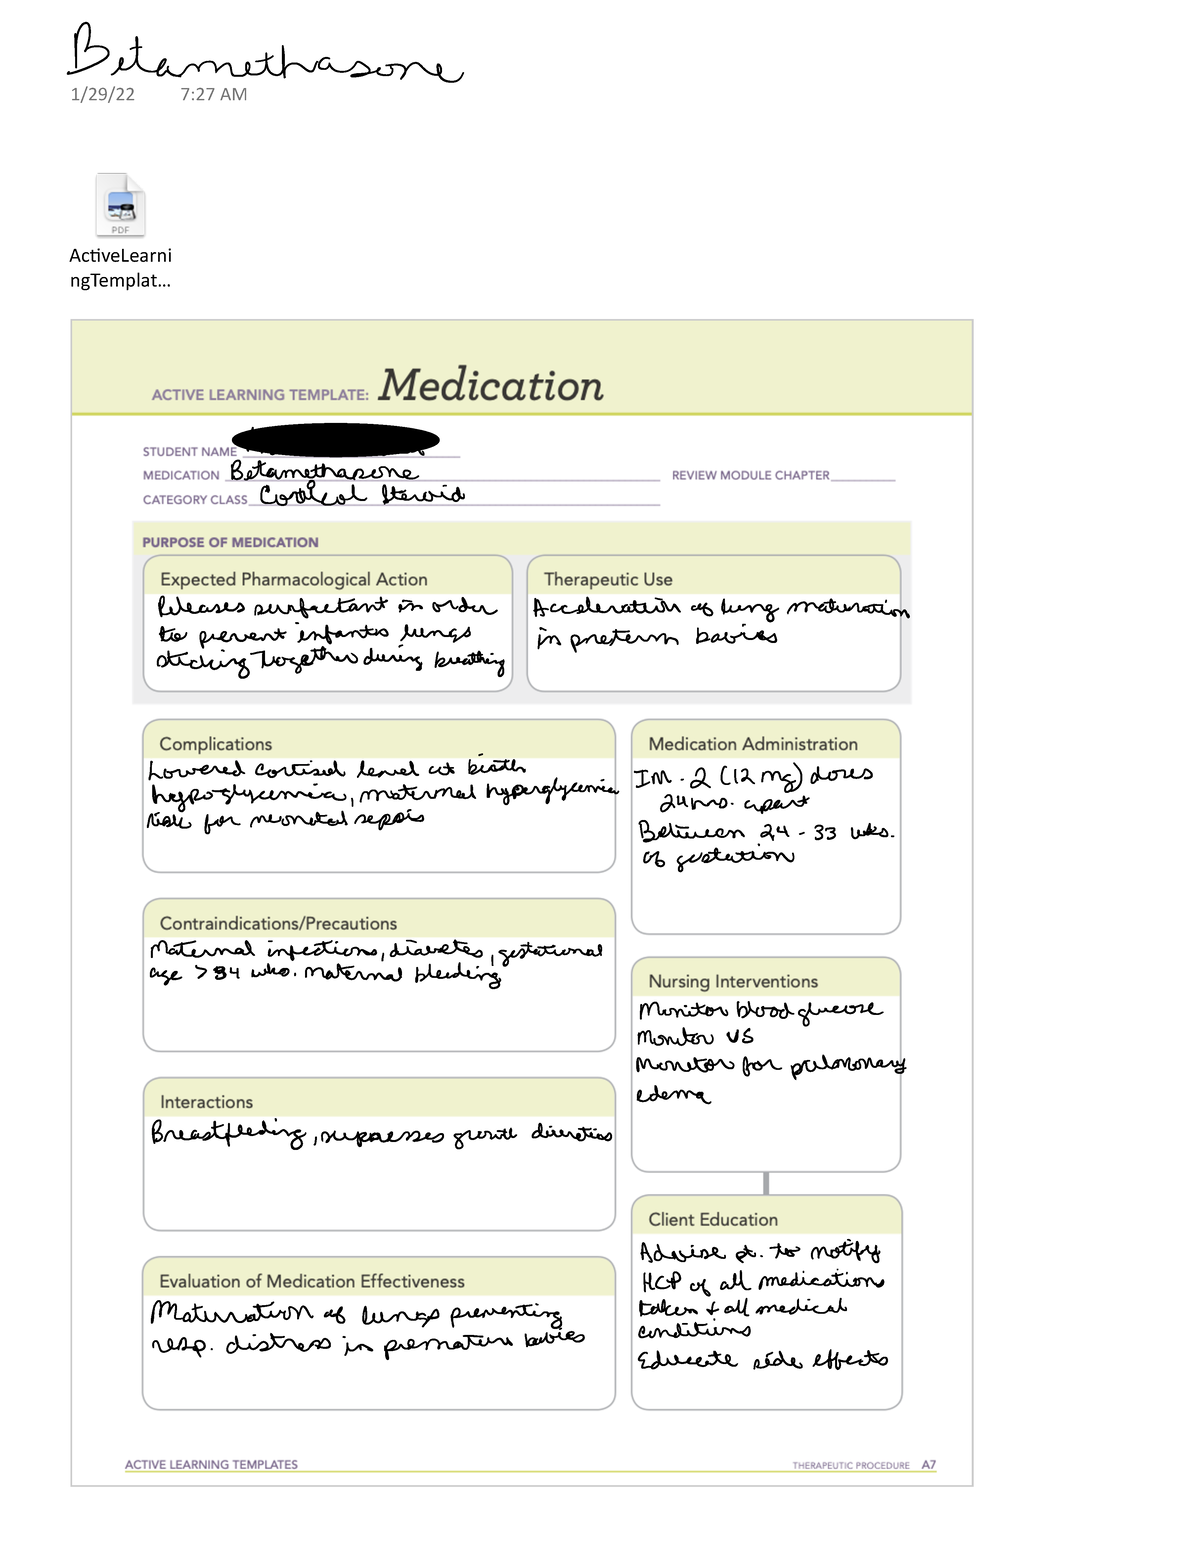 betamethasone-medication-template-ati-n308-ac-velearni-ngtemplat